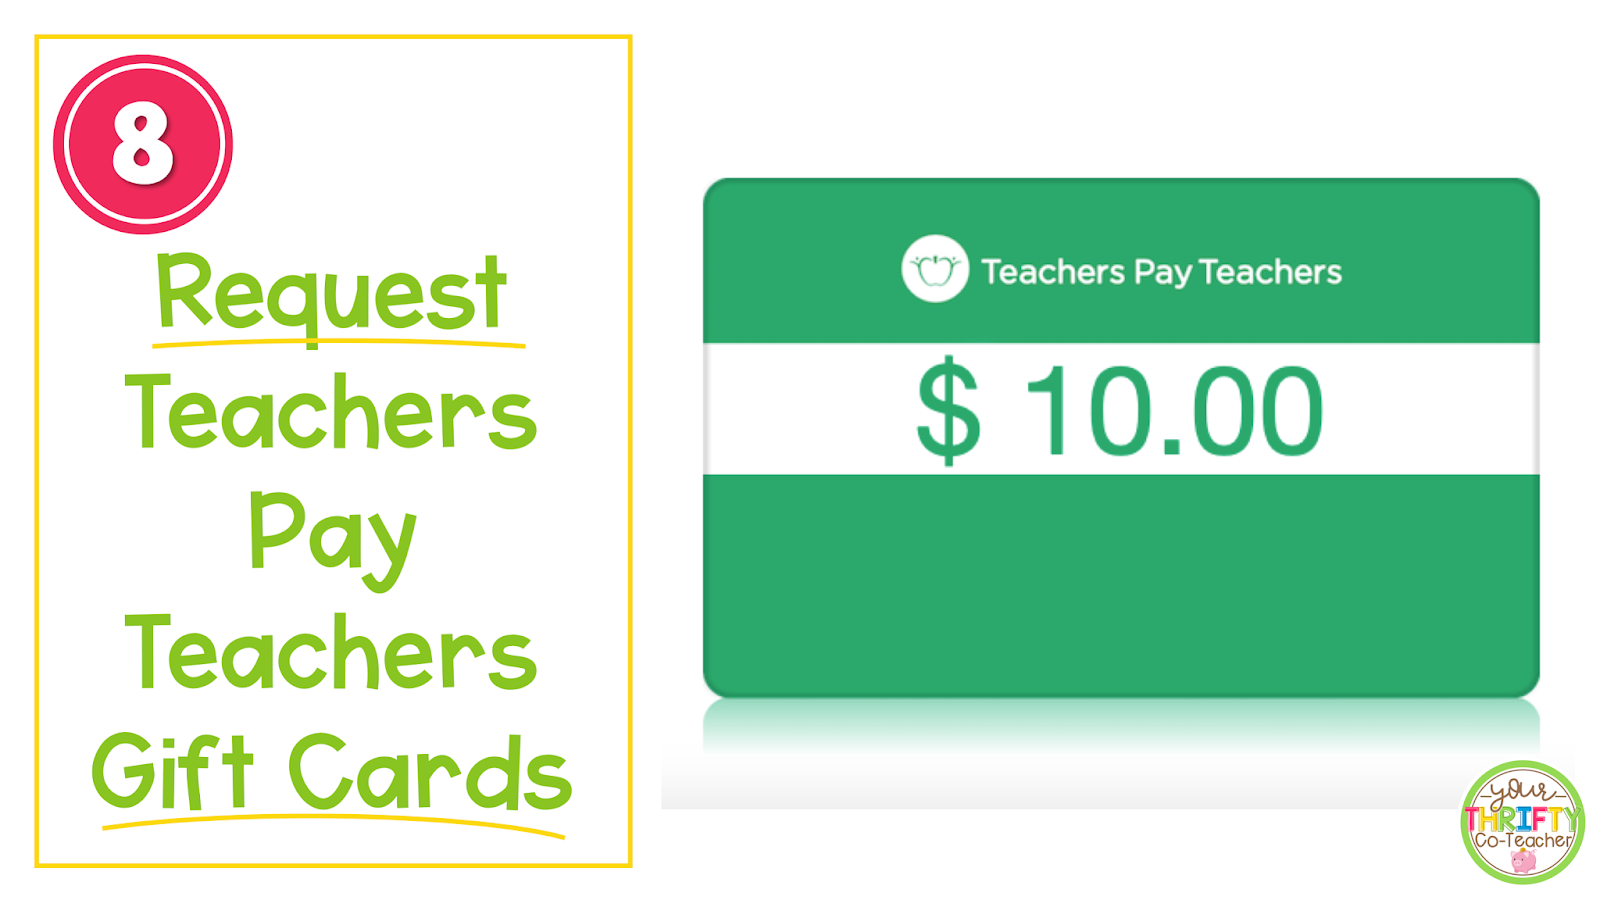 Teachers Pay Teachers Promo Codes Not Needed to Save Money